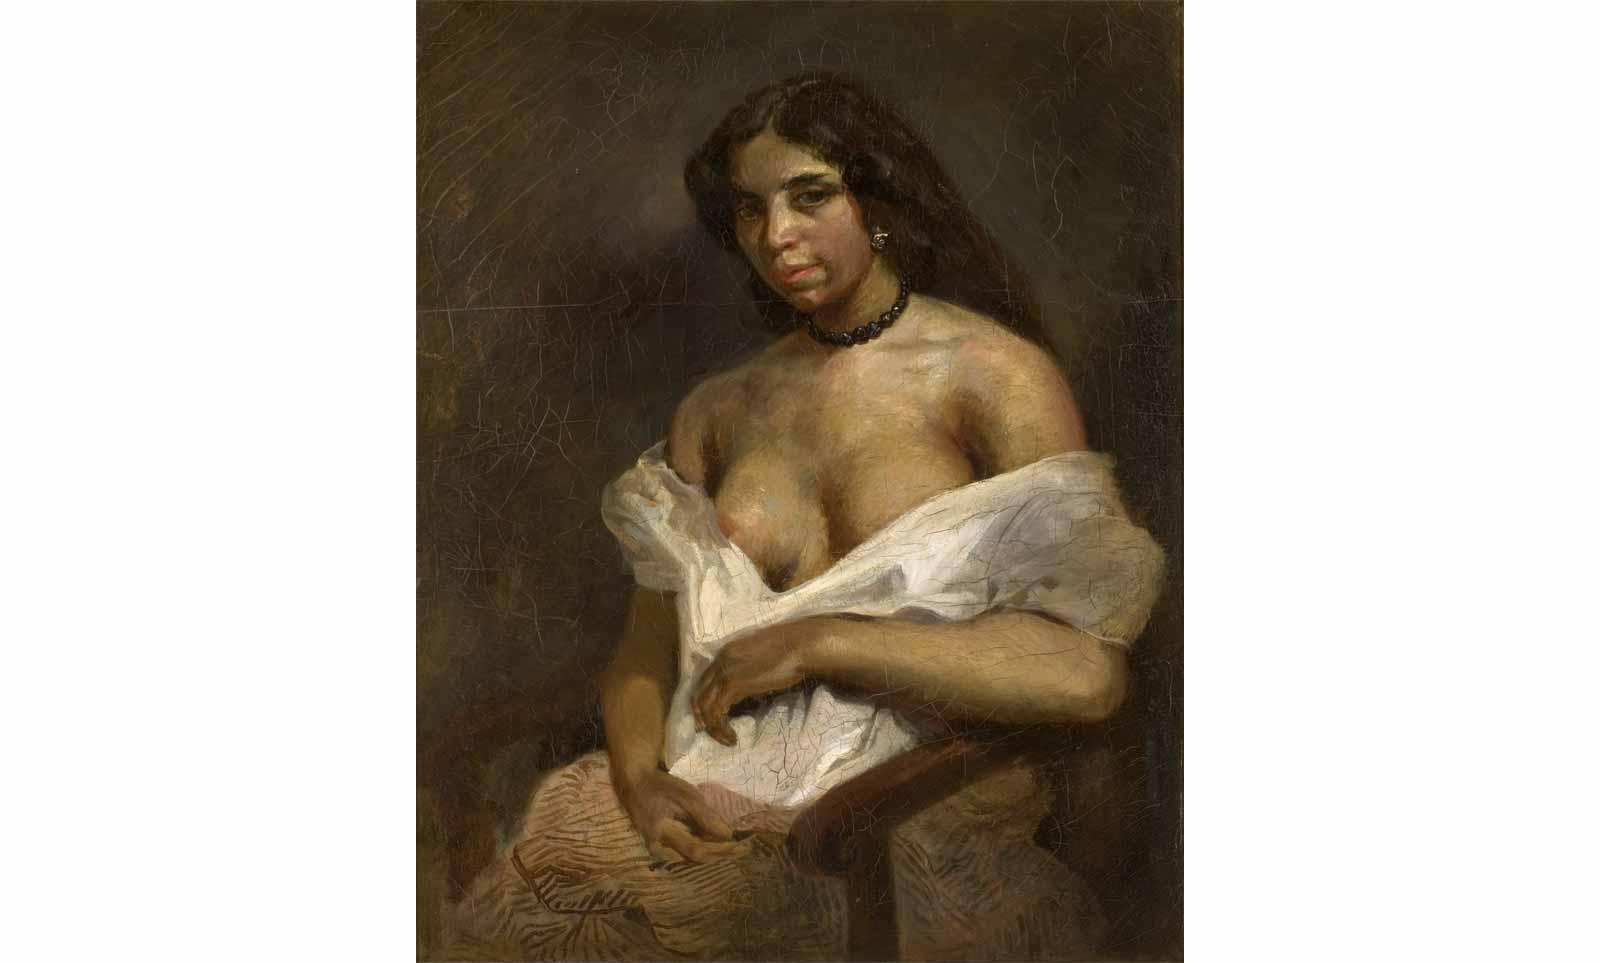 Eugene Delacroix (1798-1863), Study after the model Aspasie, circa 1824-1826 